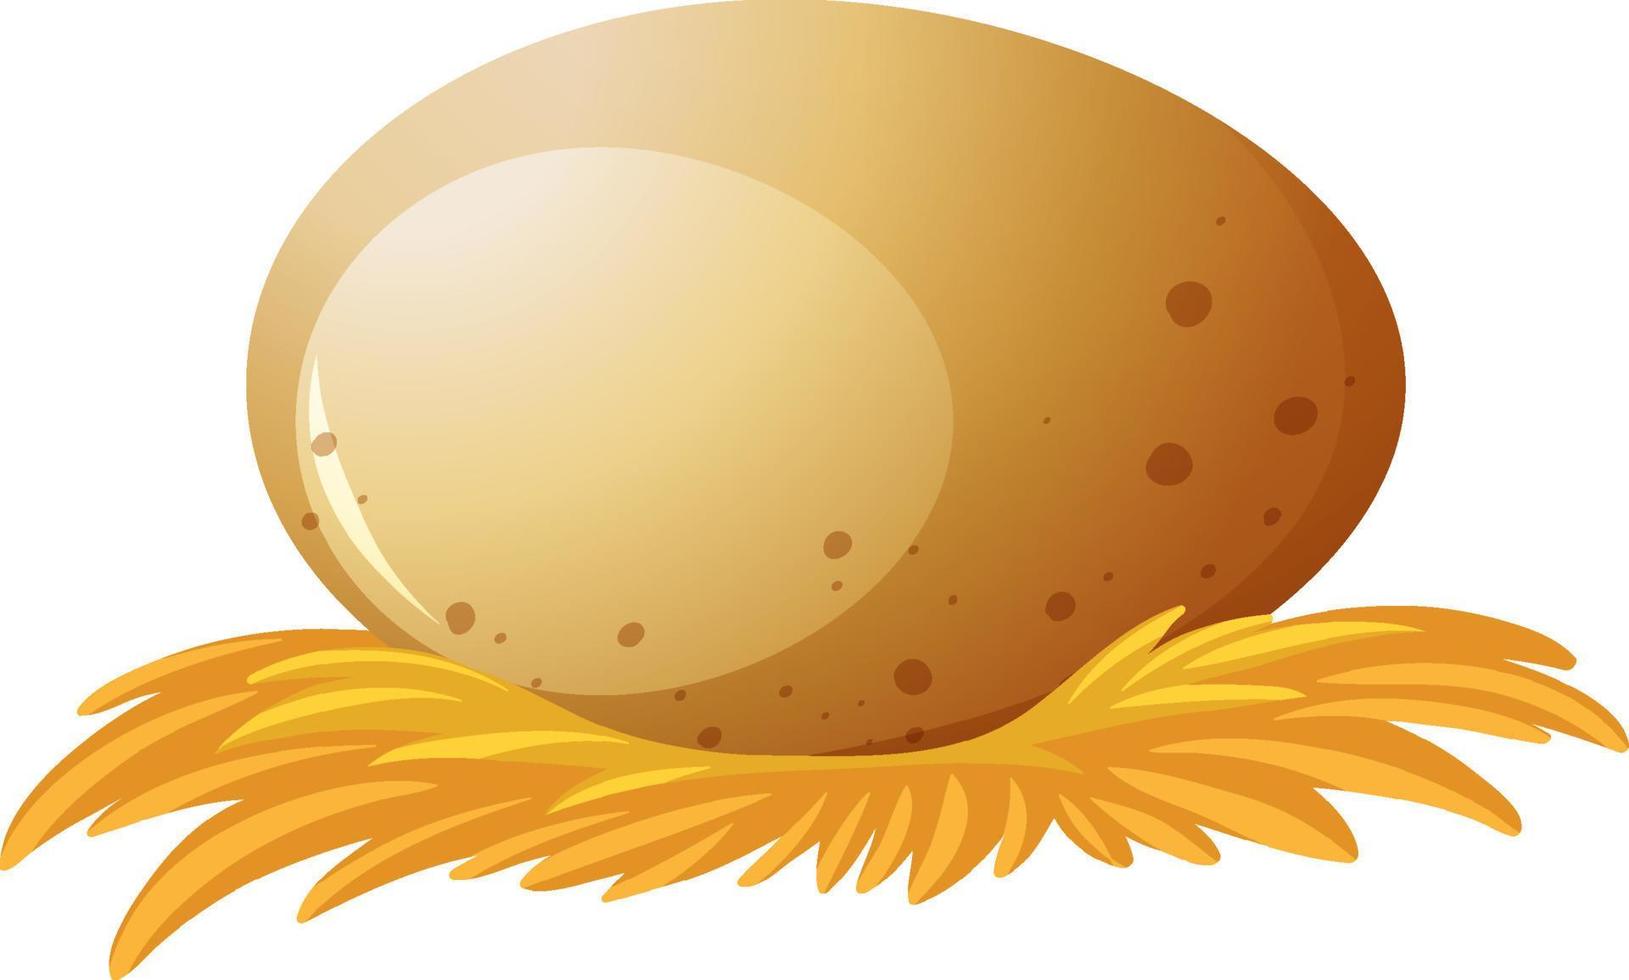 Chicken or duck egg on hay nest vector